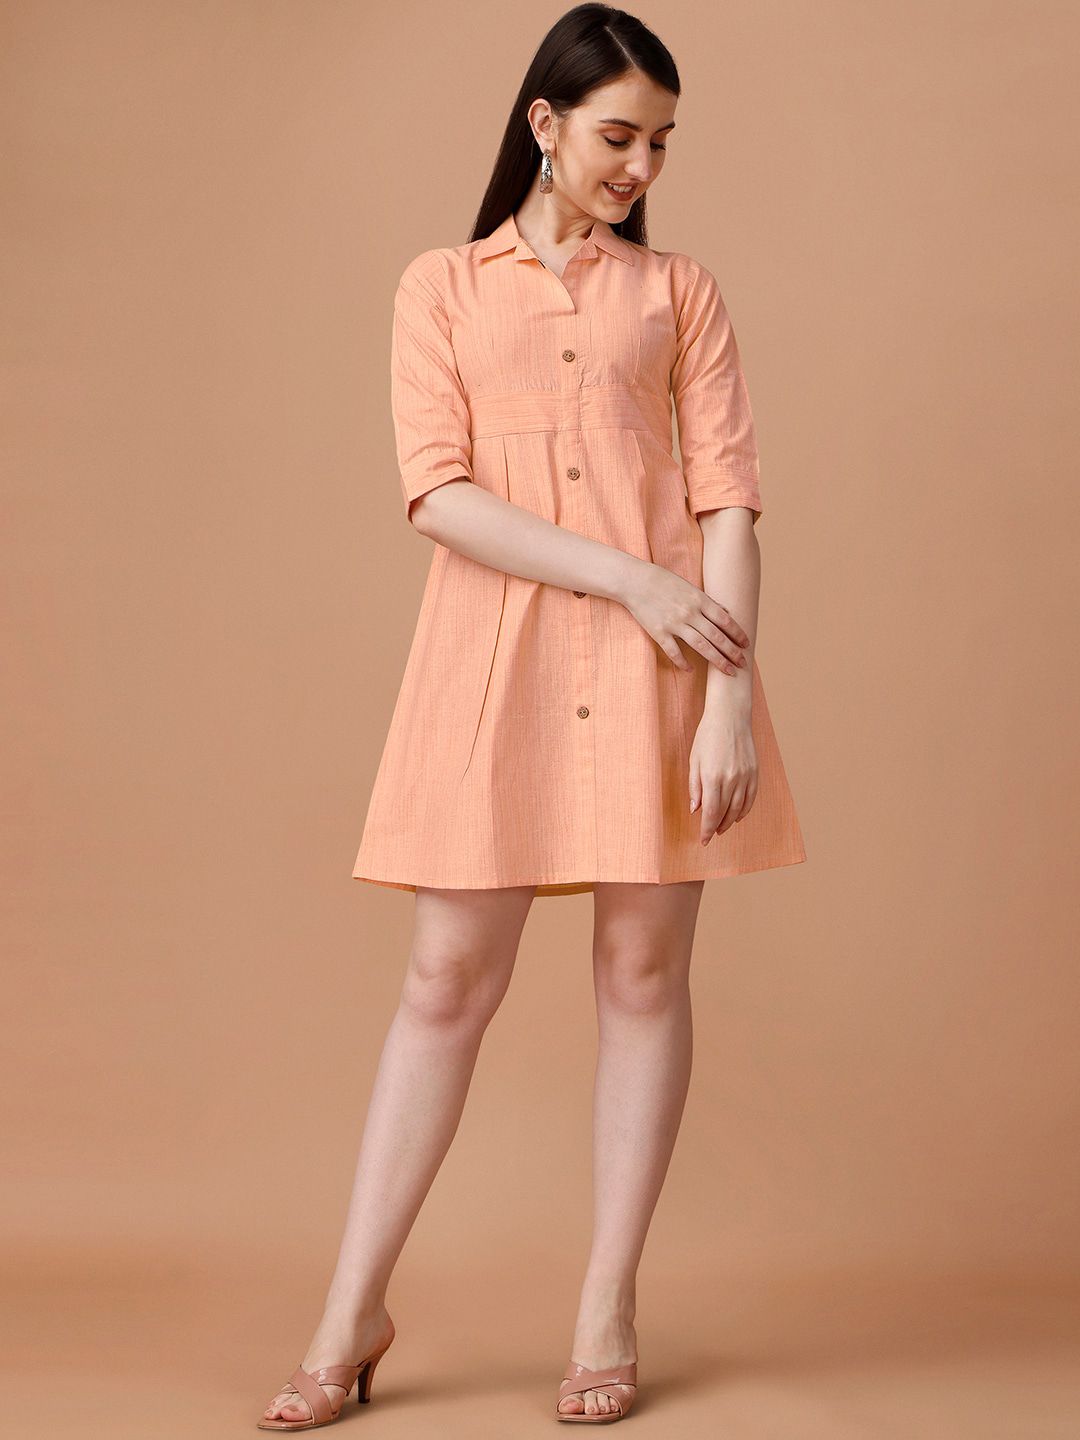 KALINI Self Designed Cotton Mini Shirt Dress Price in India